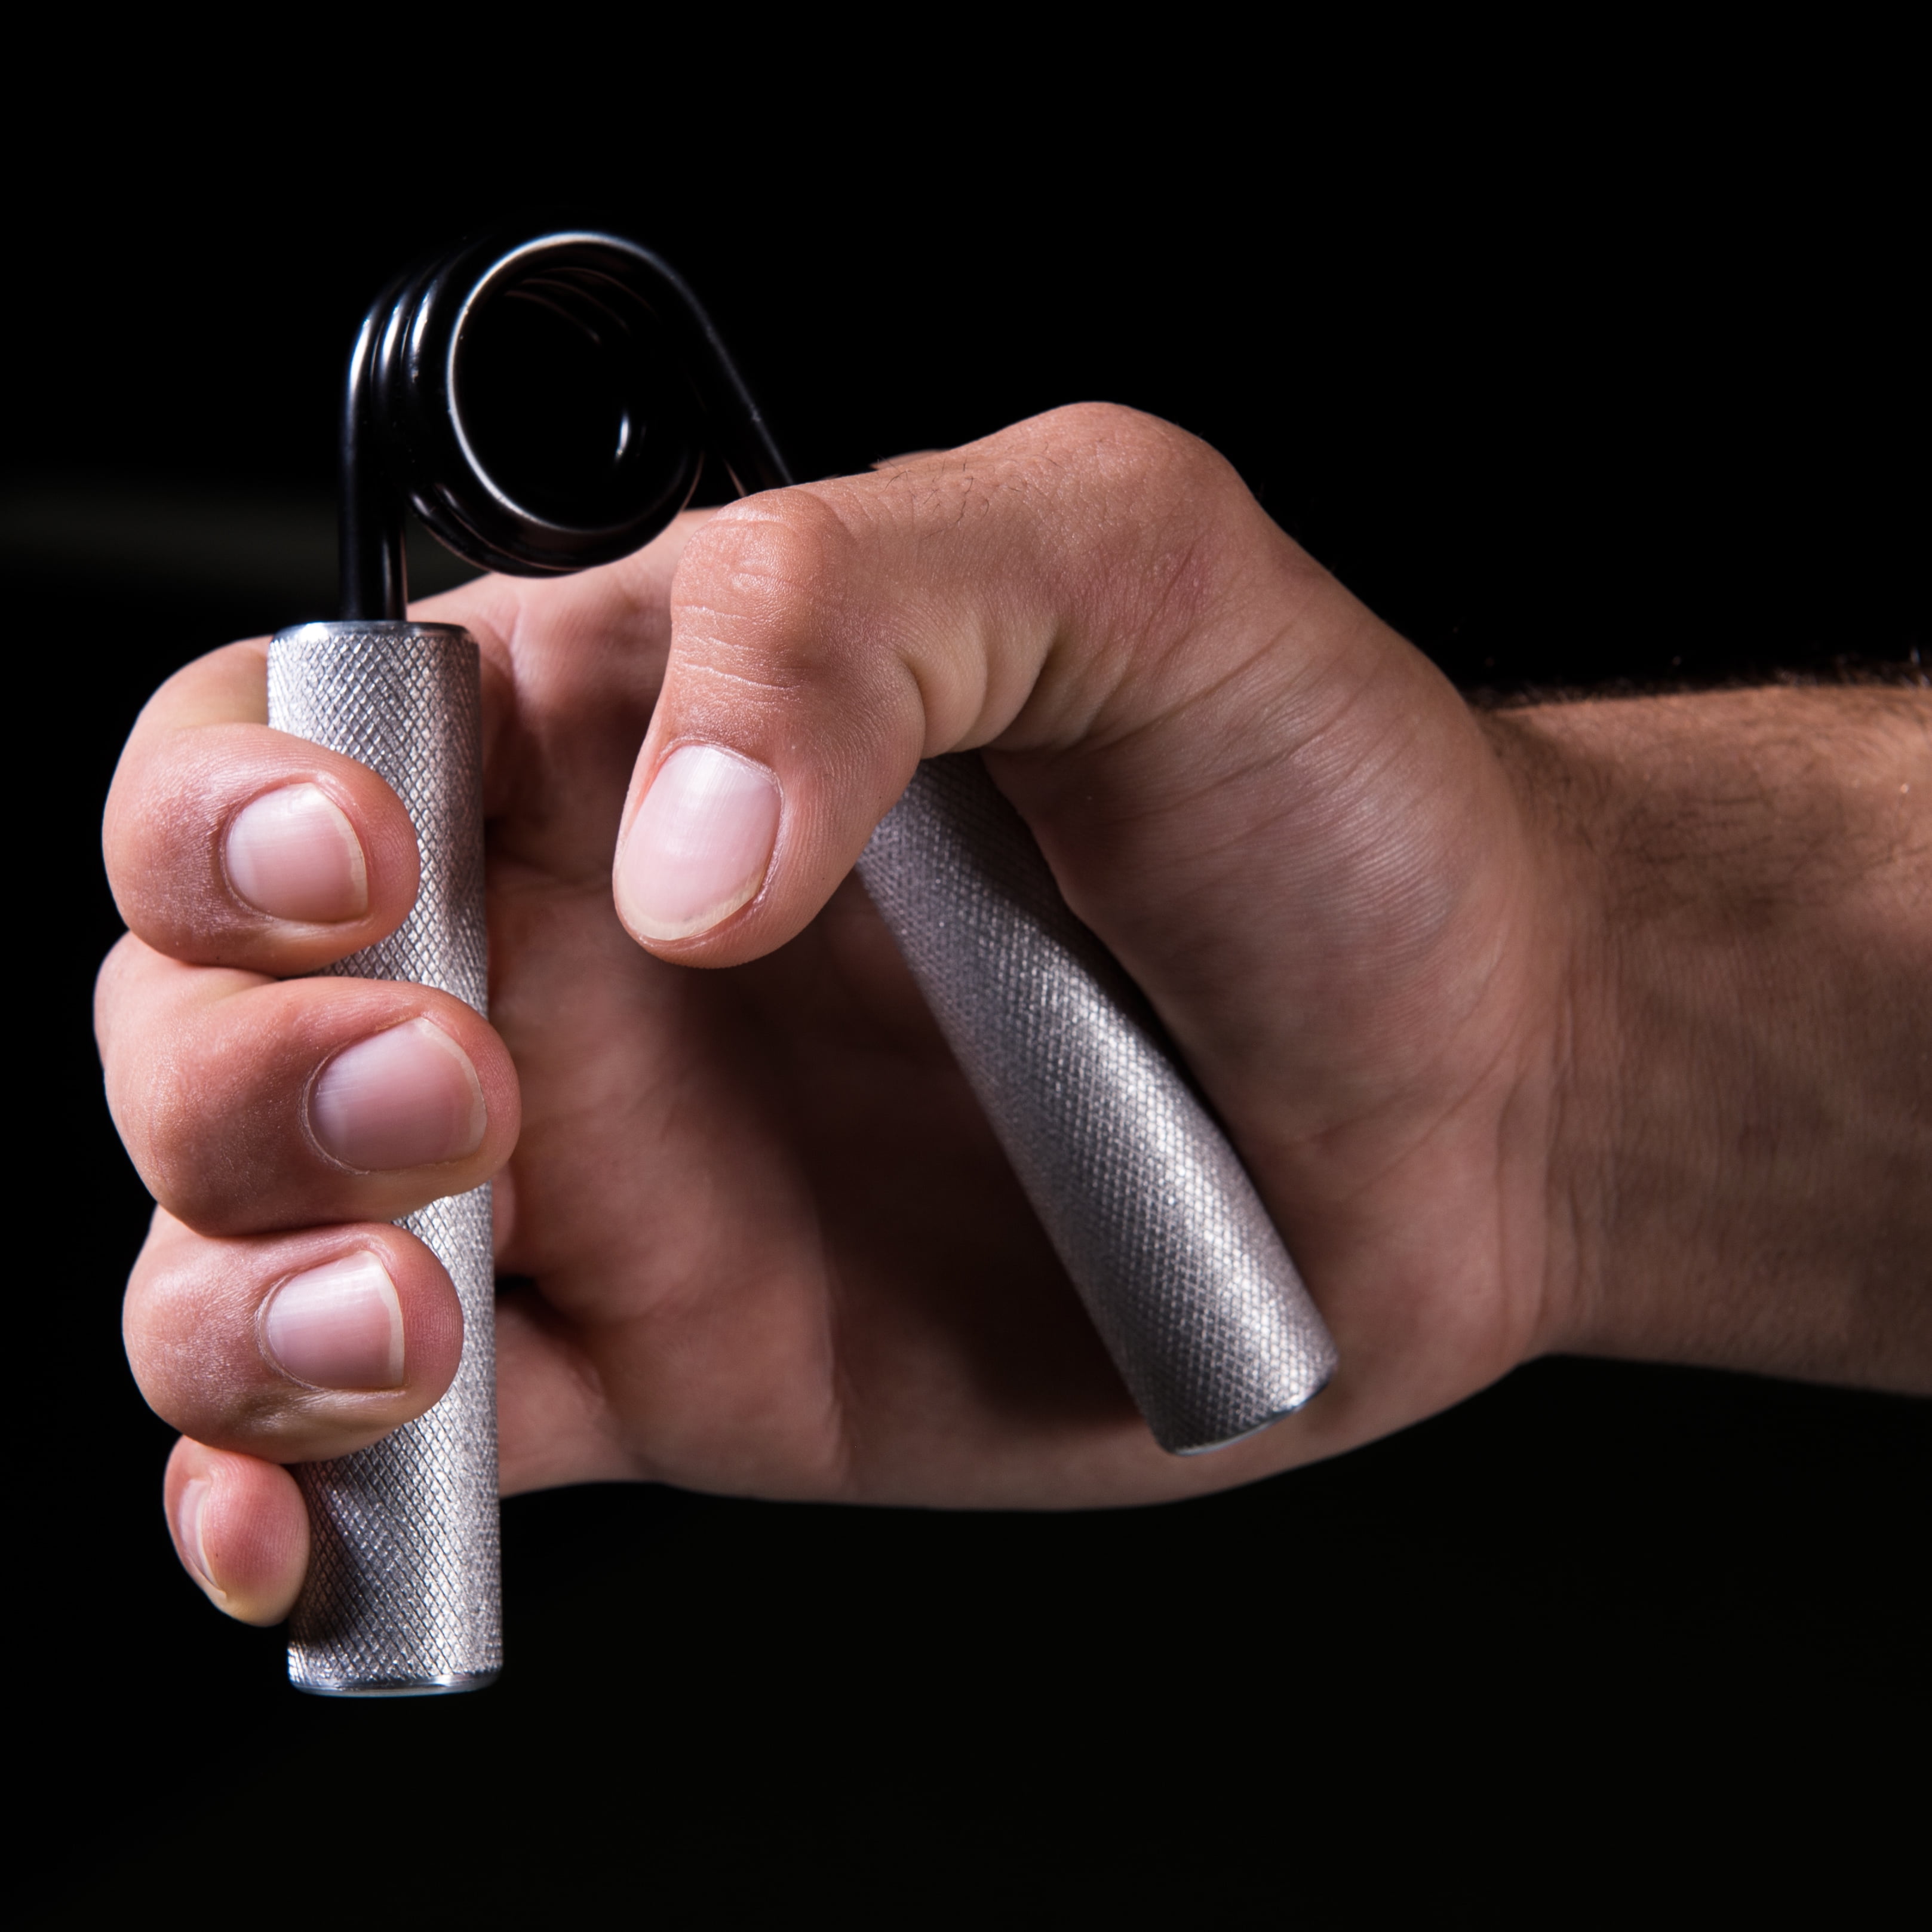 Details about   Finger Gripper Strengthener Hand Power Exerciser Resistance Wrist Fitness New 